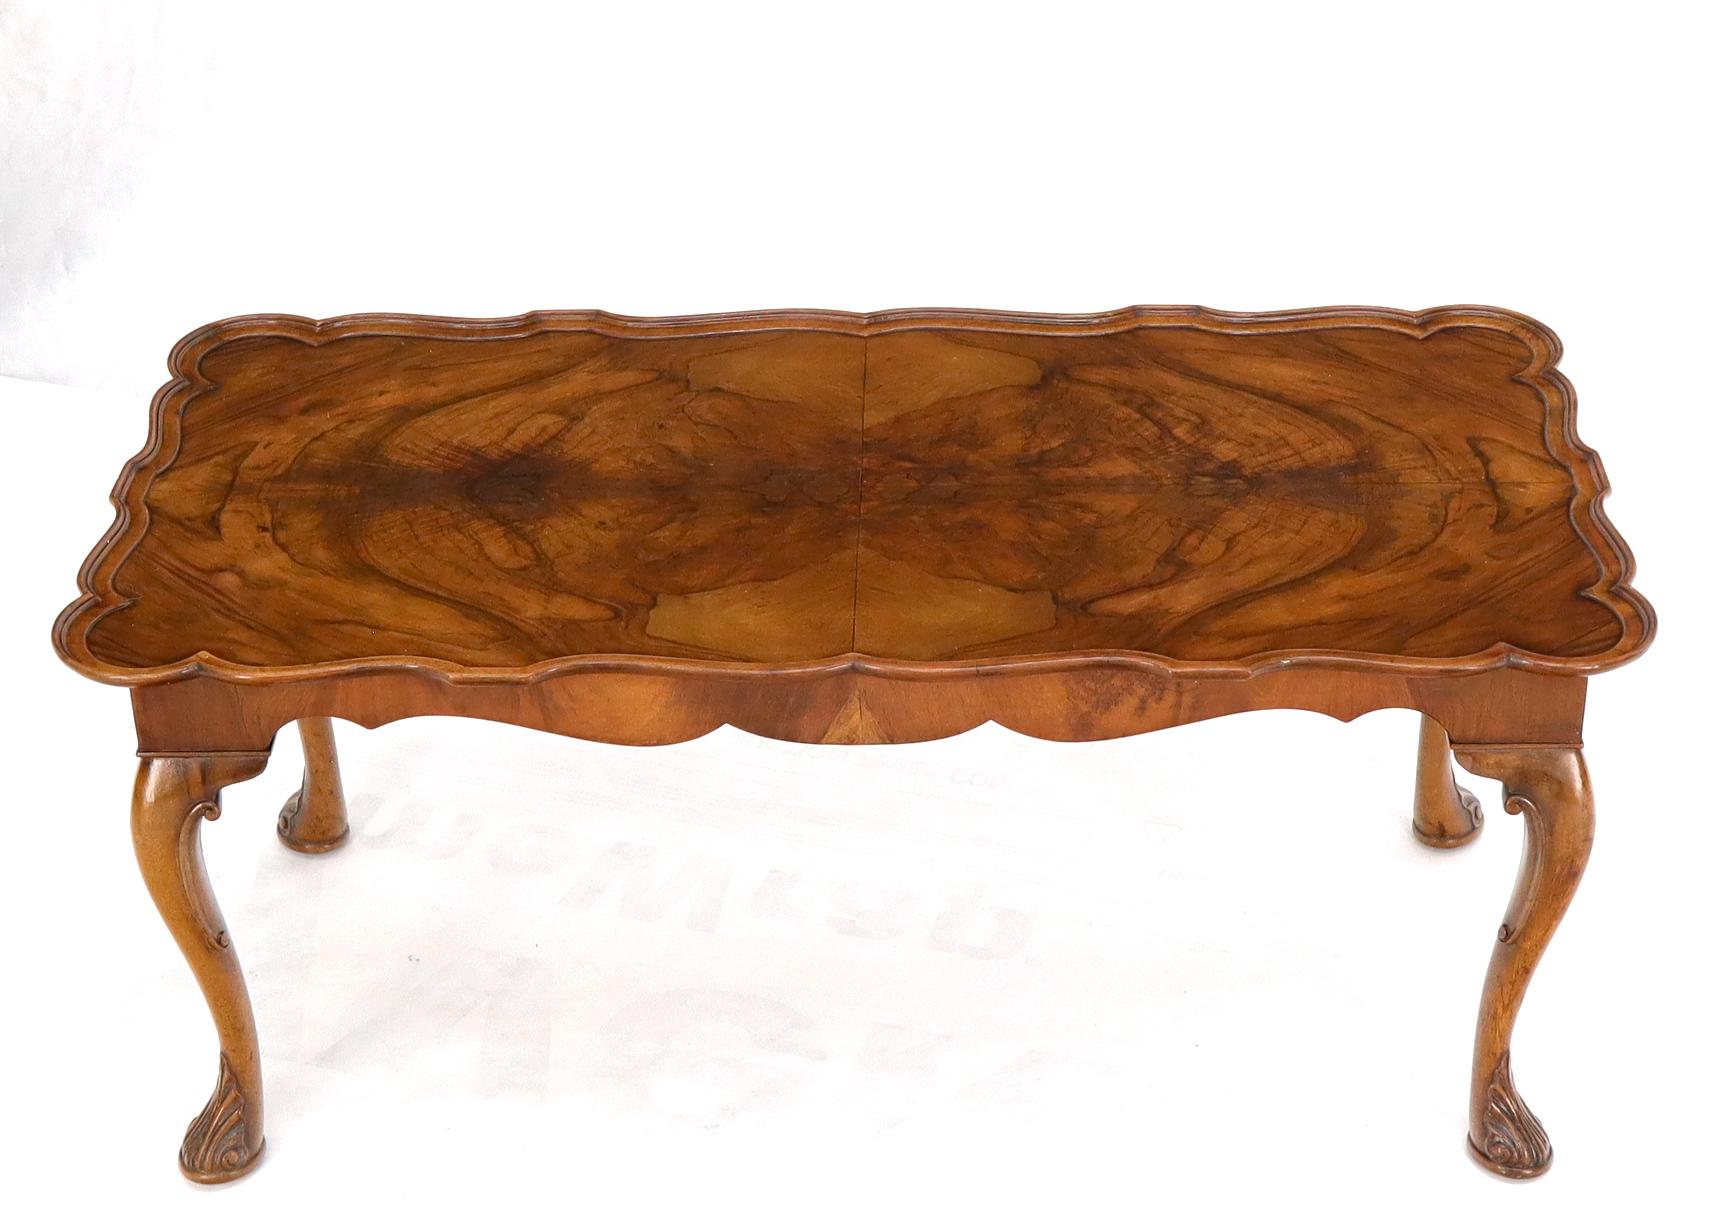 Vintage dramatic vivid walnut grain compact coffee table with scallop shape raised edges.